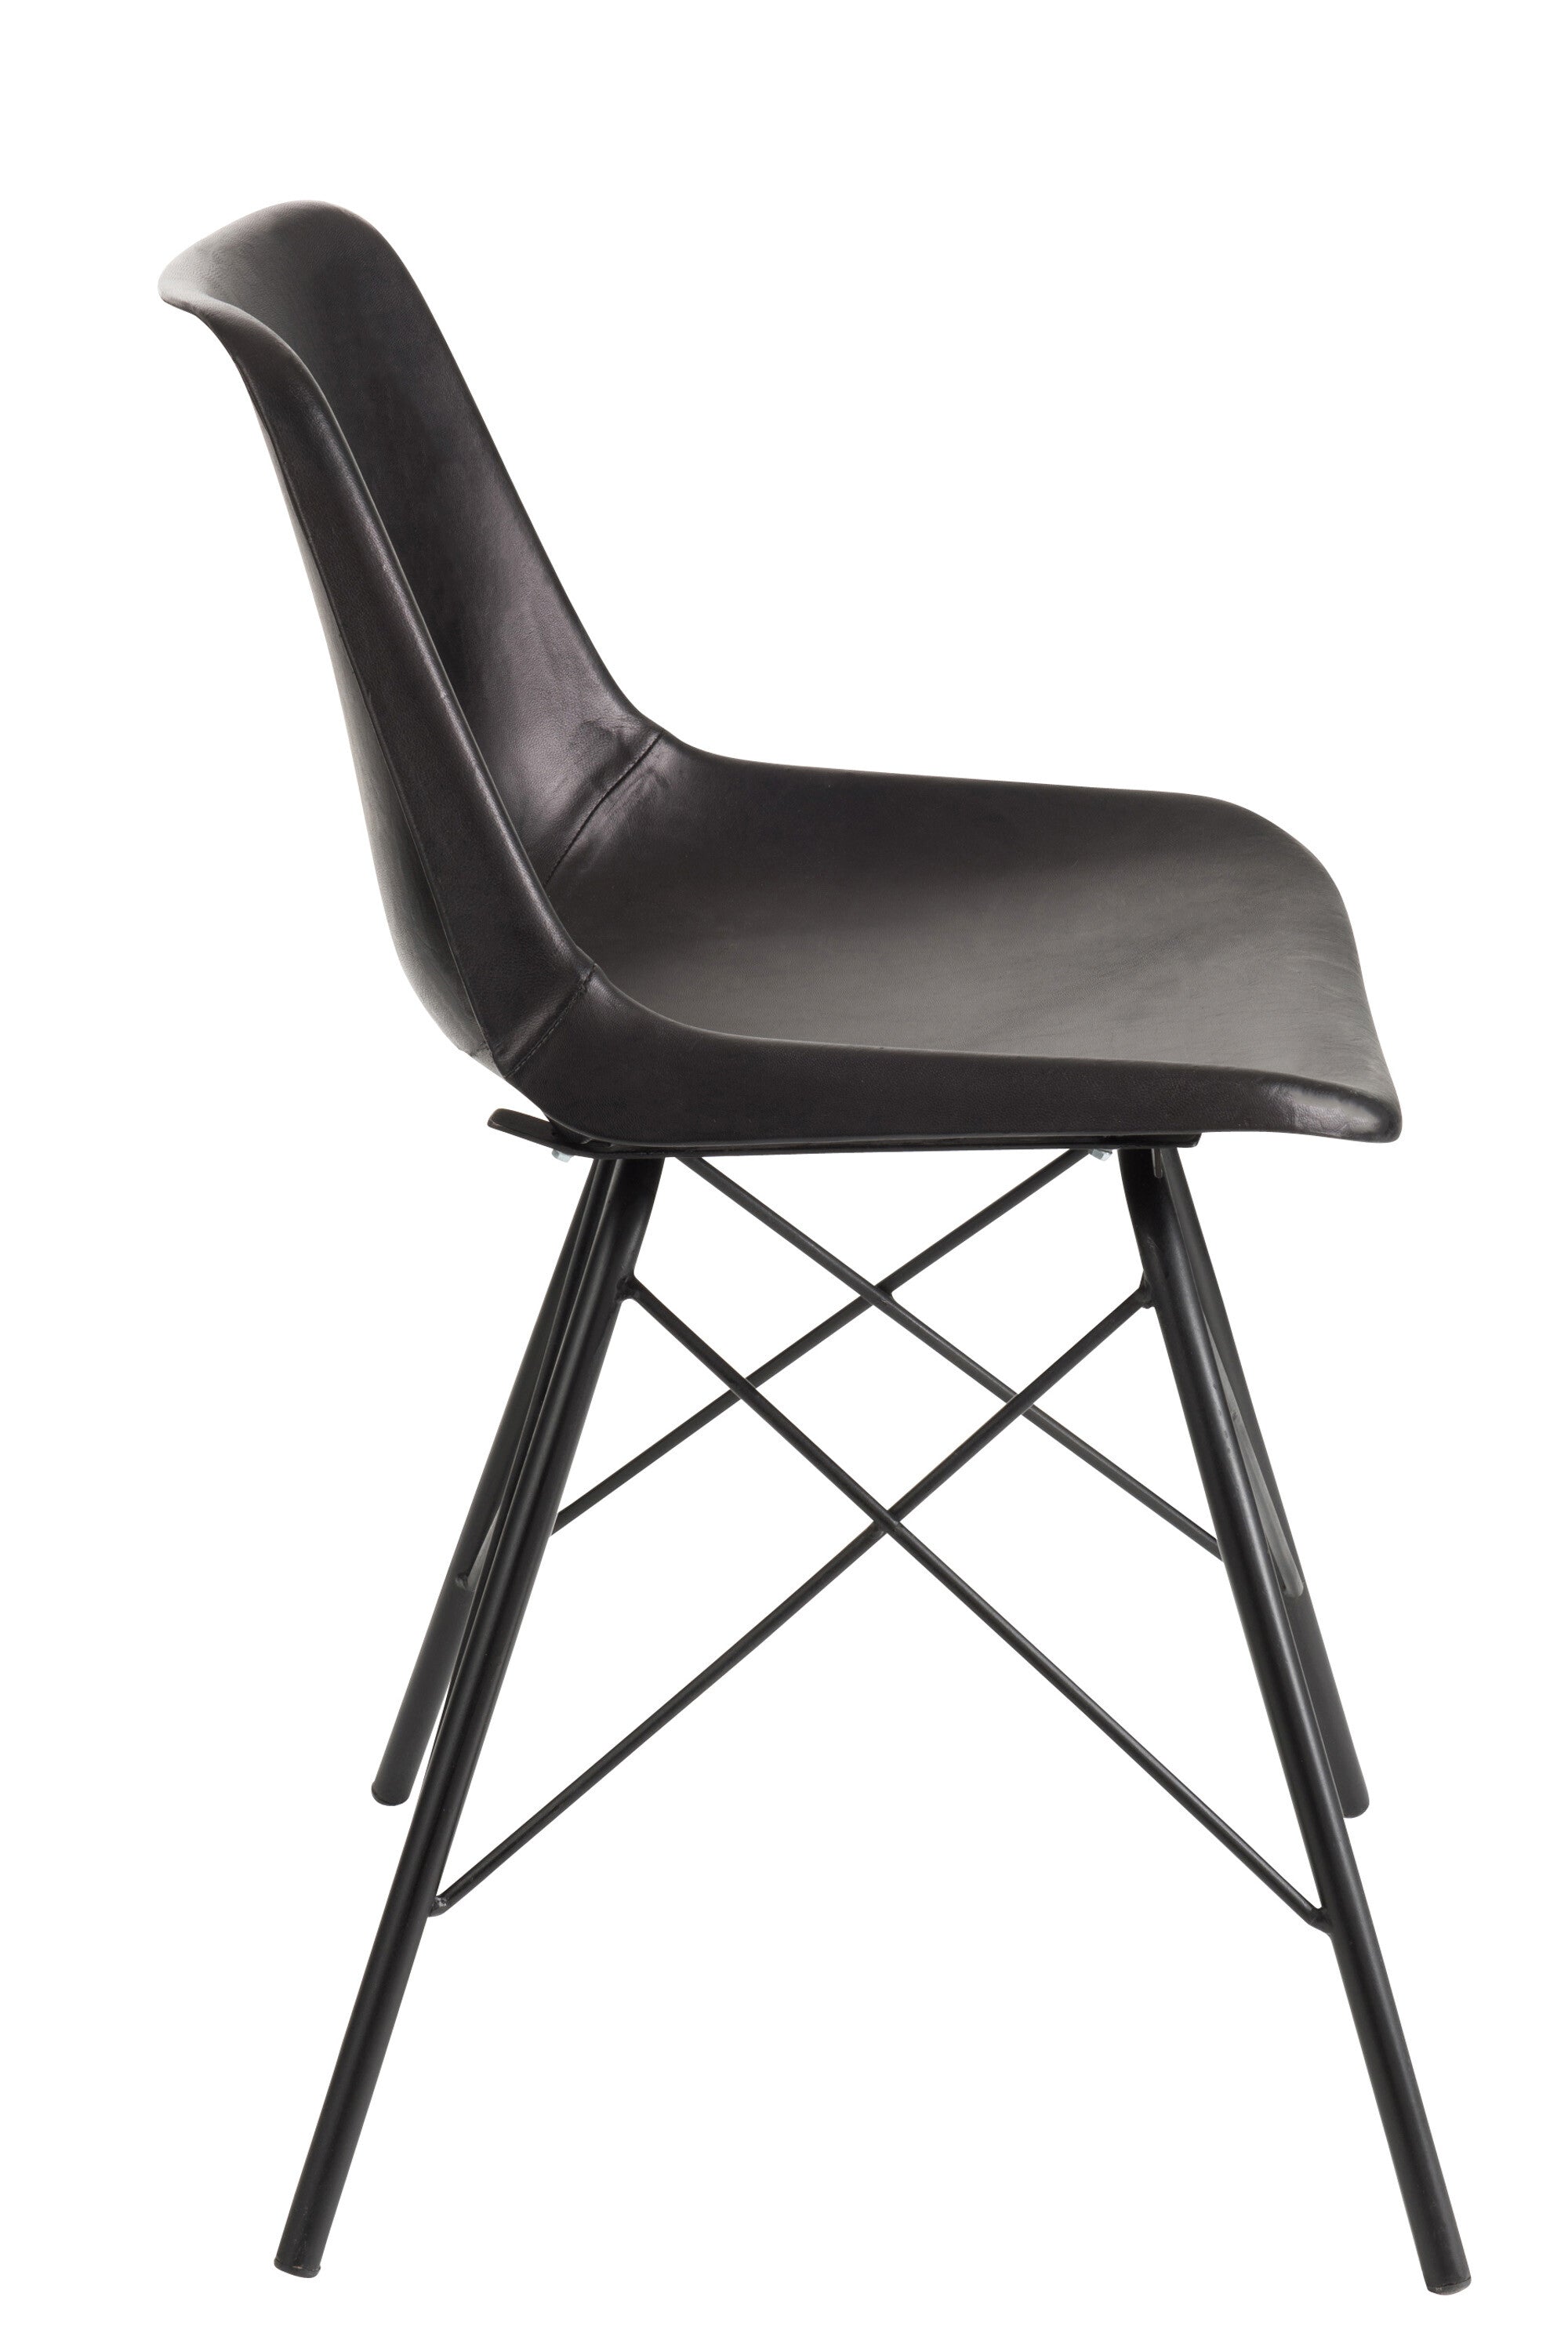 Chaise-Industriel-Noir-Mat-interieur